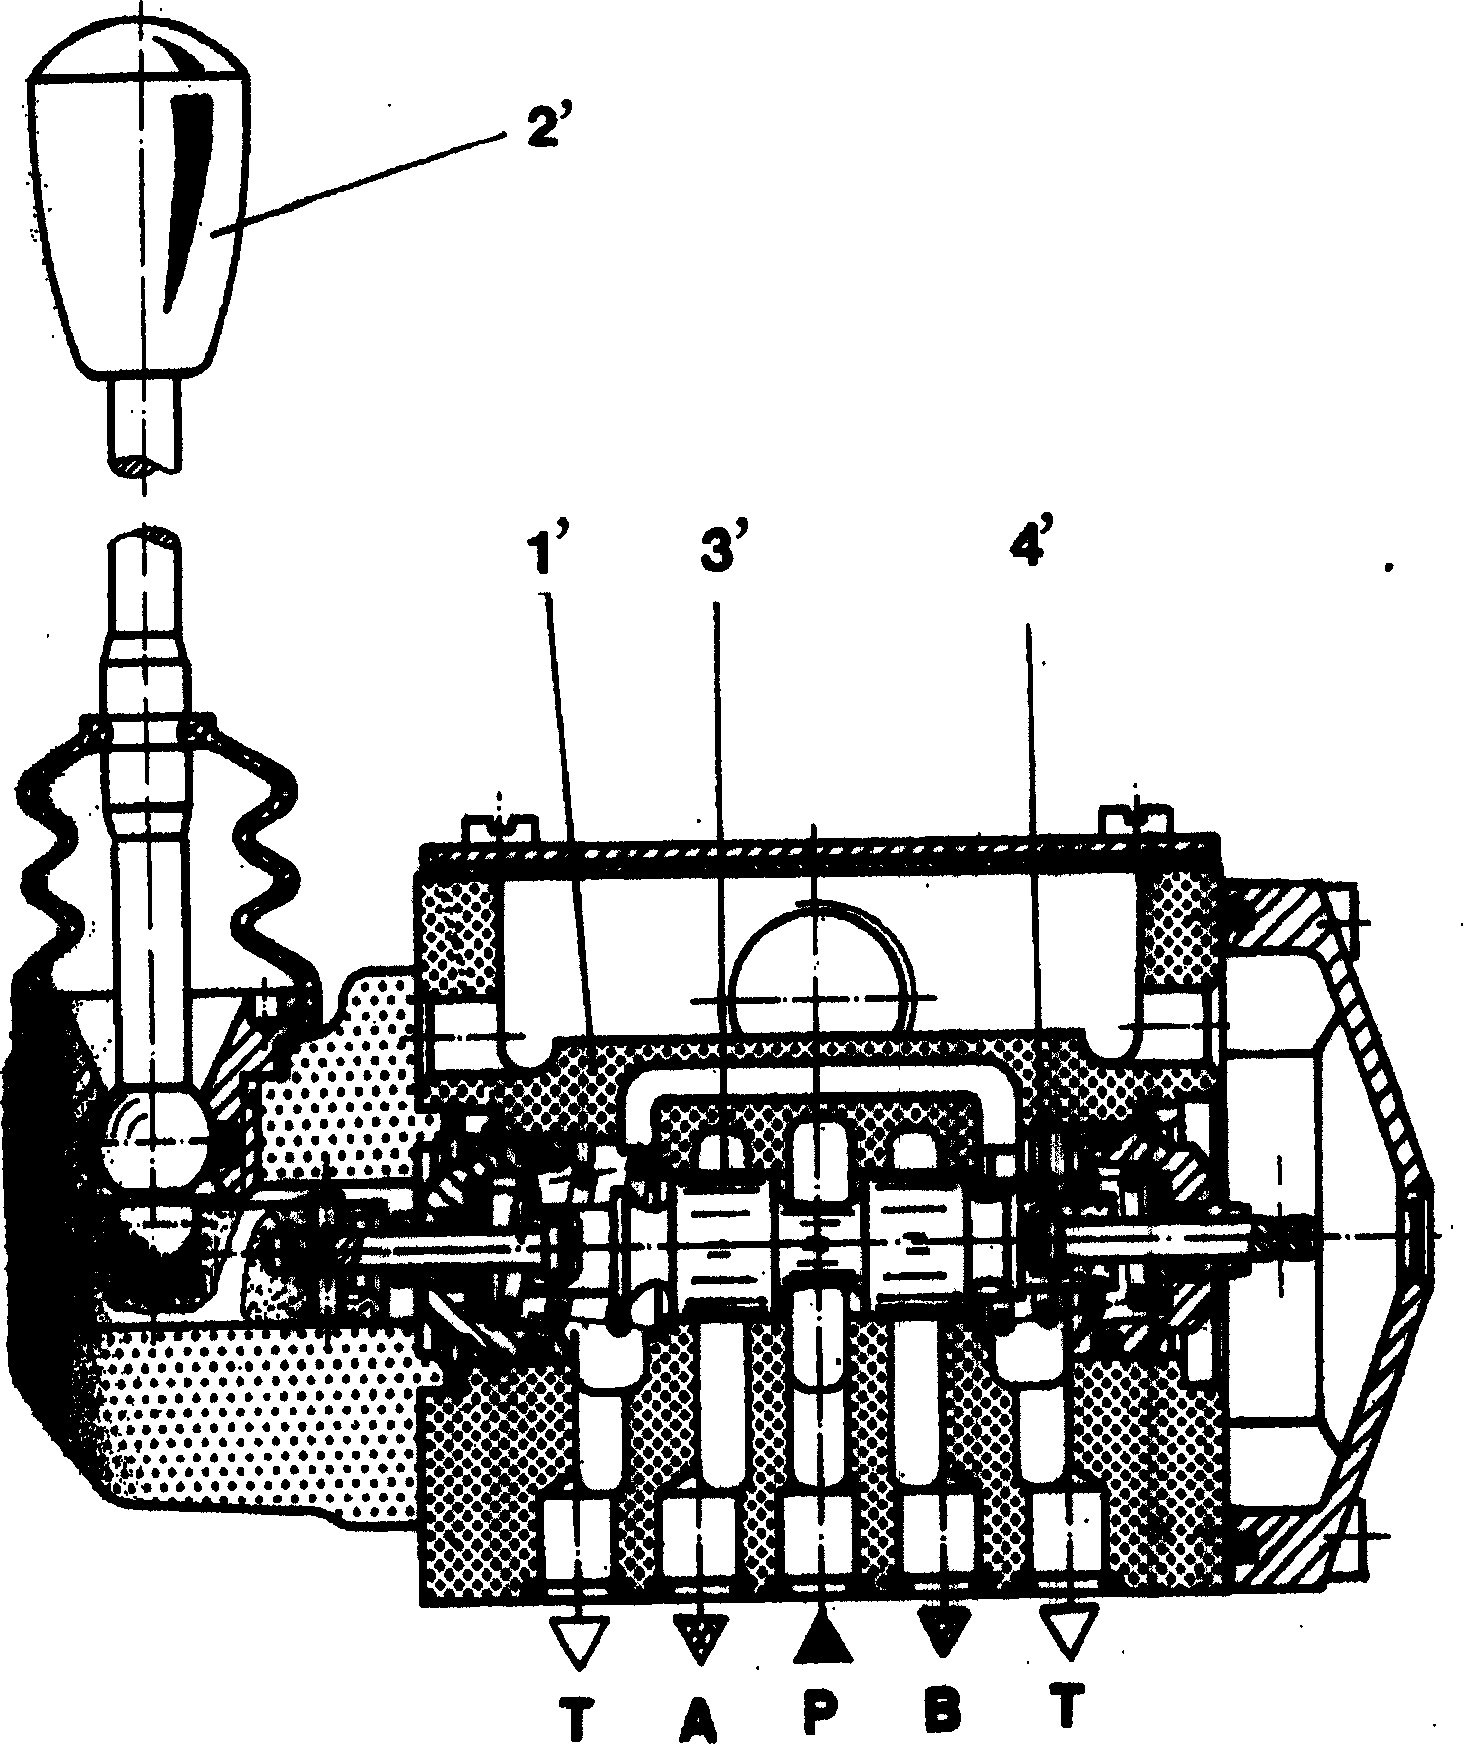 Hand-driven change valve